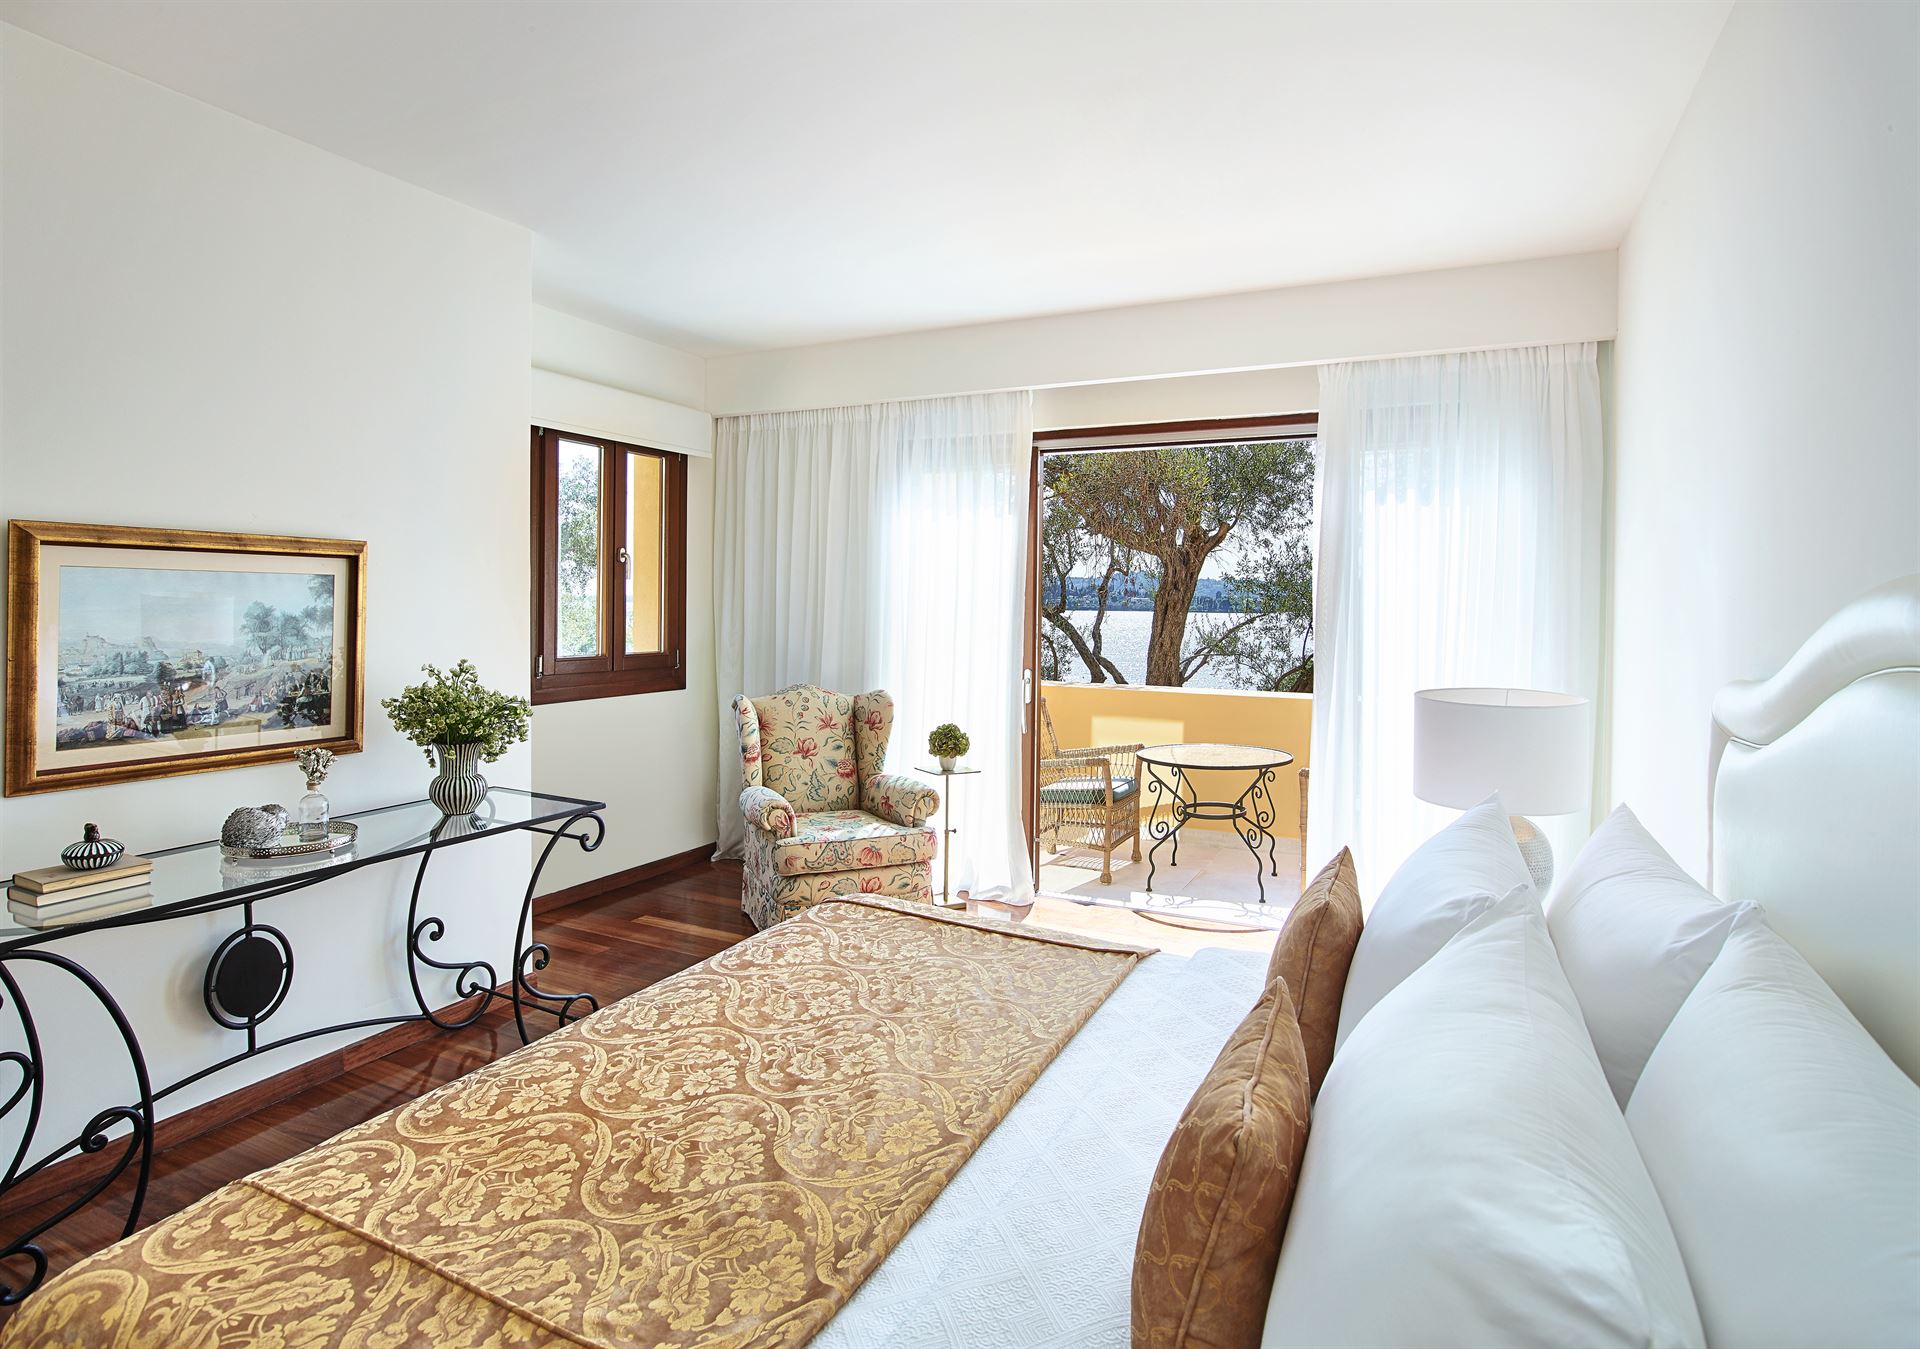 Grecotel Corfu Imperial Exclusive Resort: Two Bedroom SF Family Bgl Upper Floor